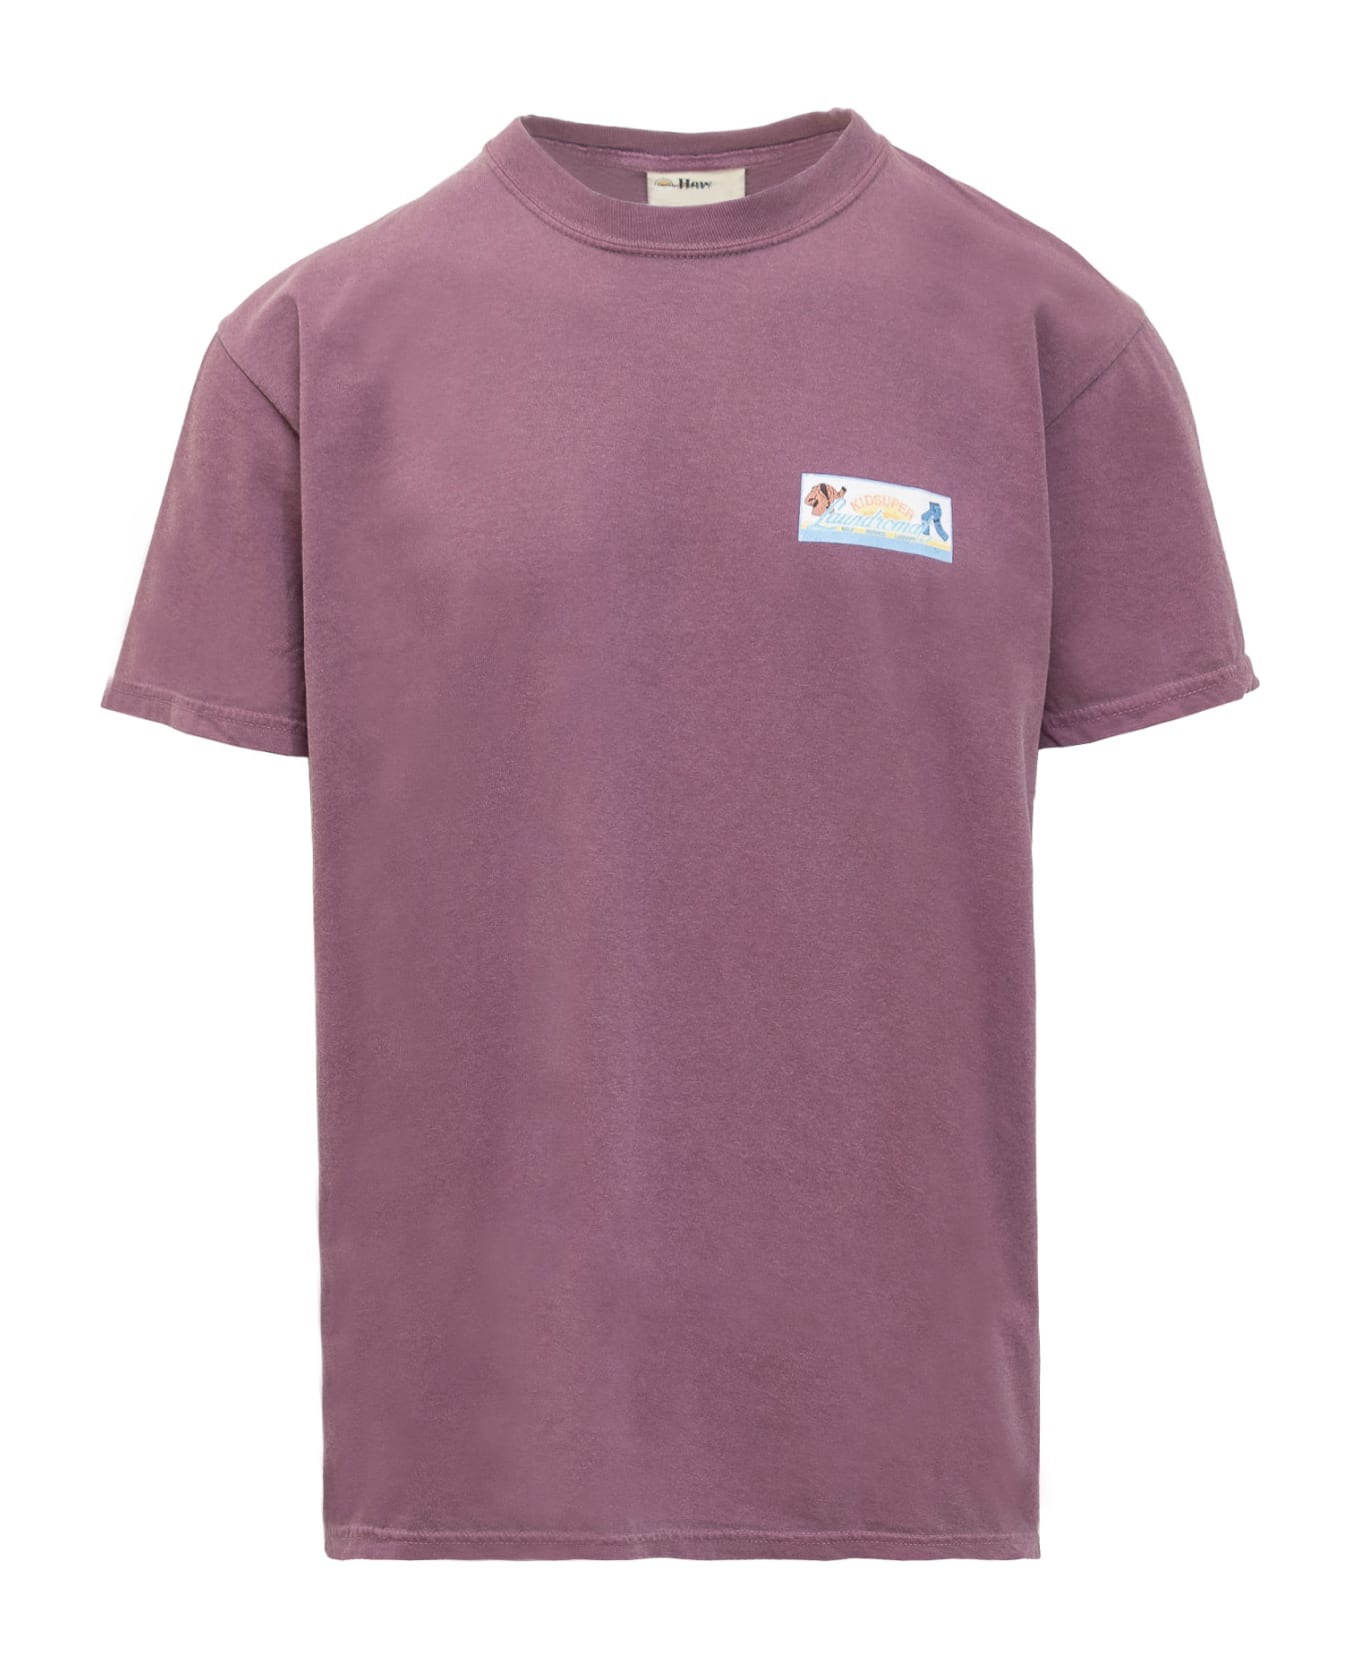 Kidsuper Laundromat T-shirt - PLUM